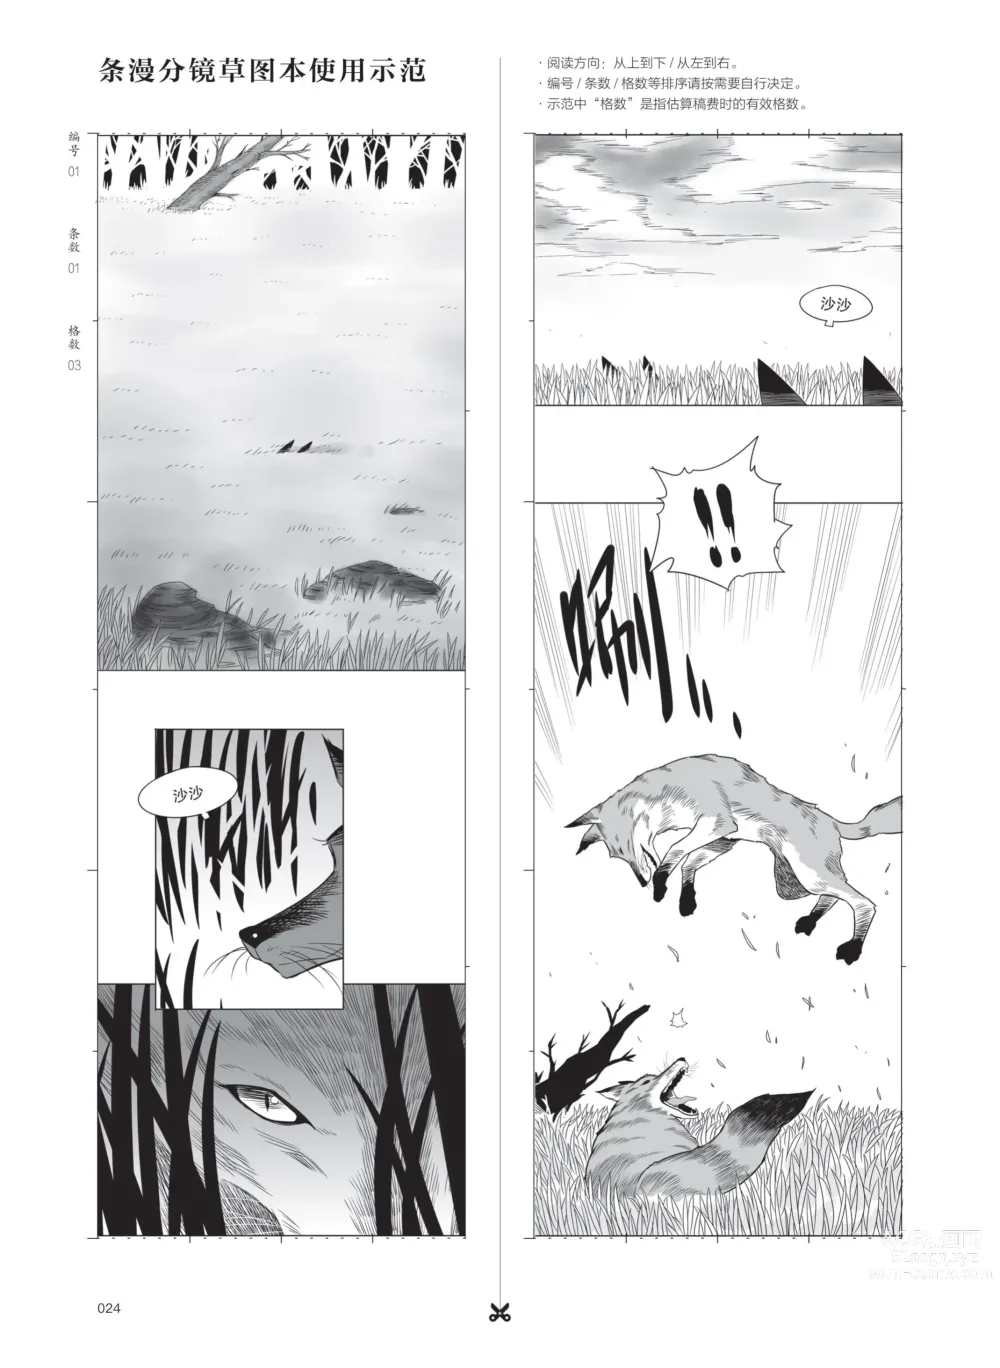 Page 25 of manga 条漫分镜草图本